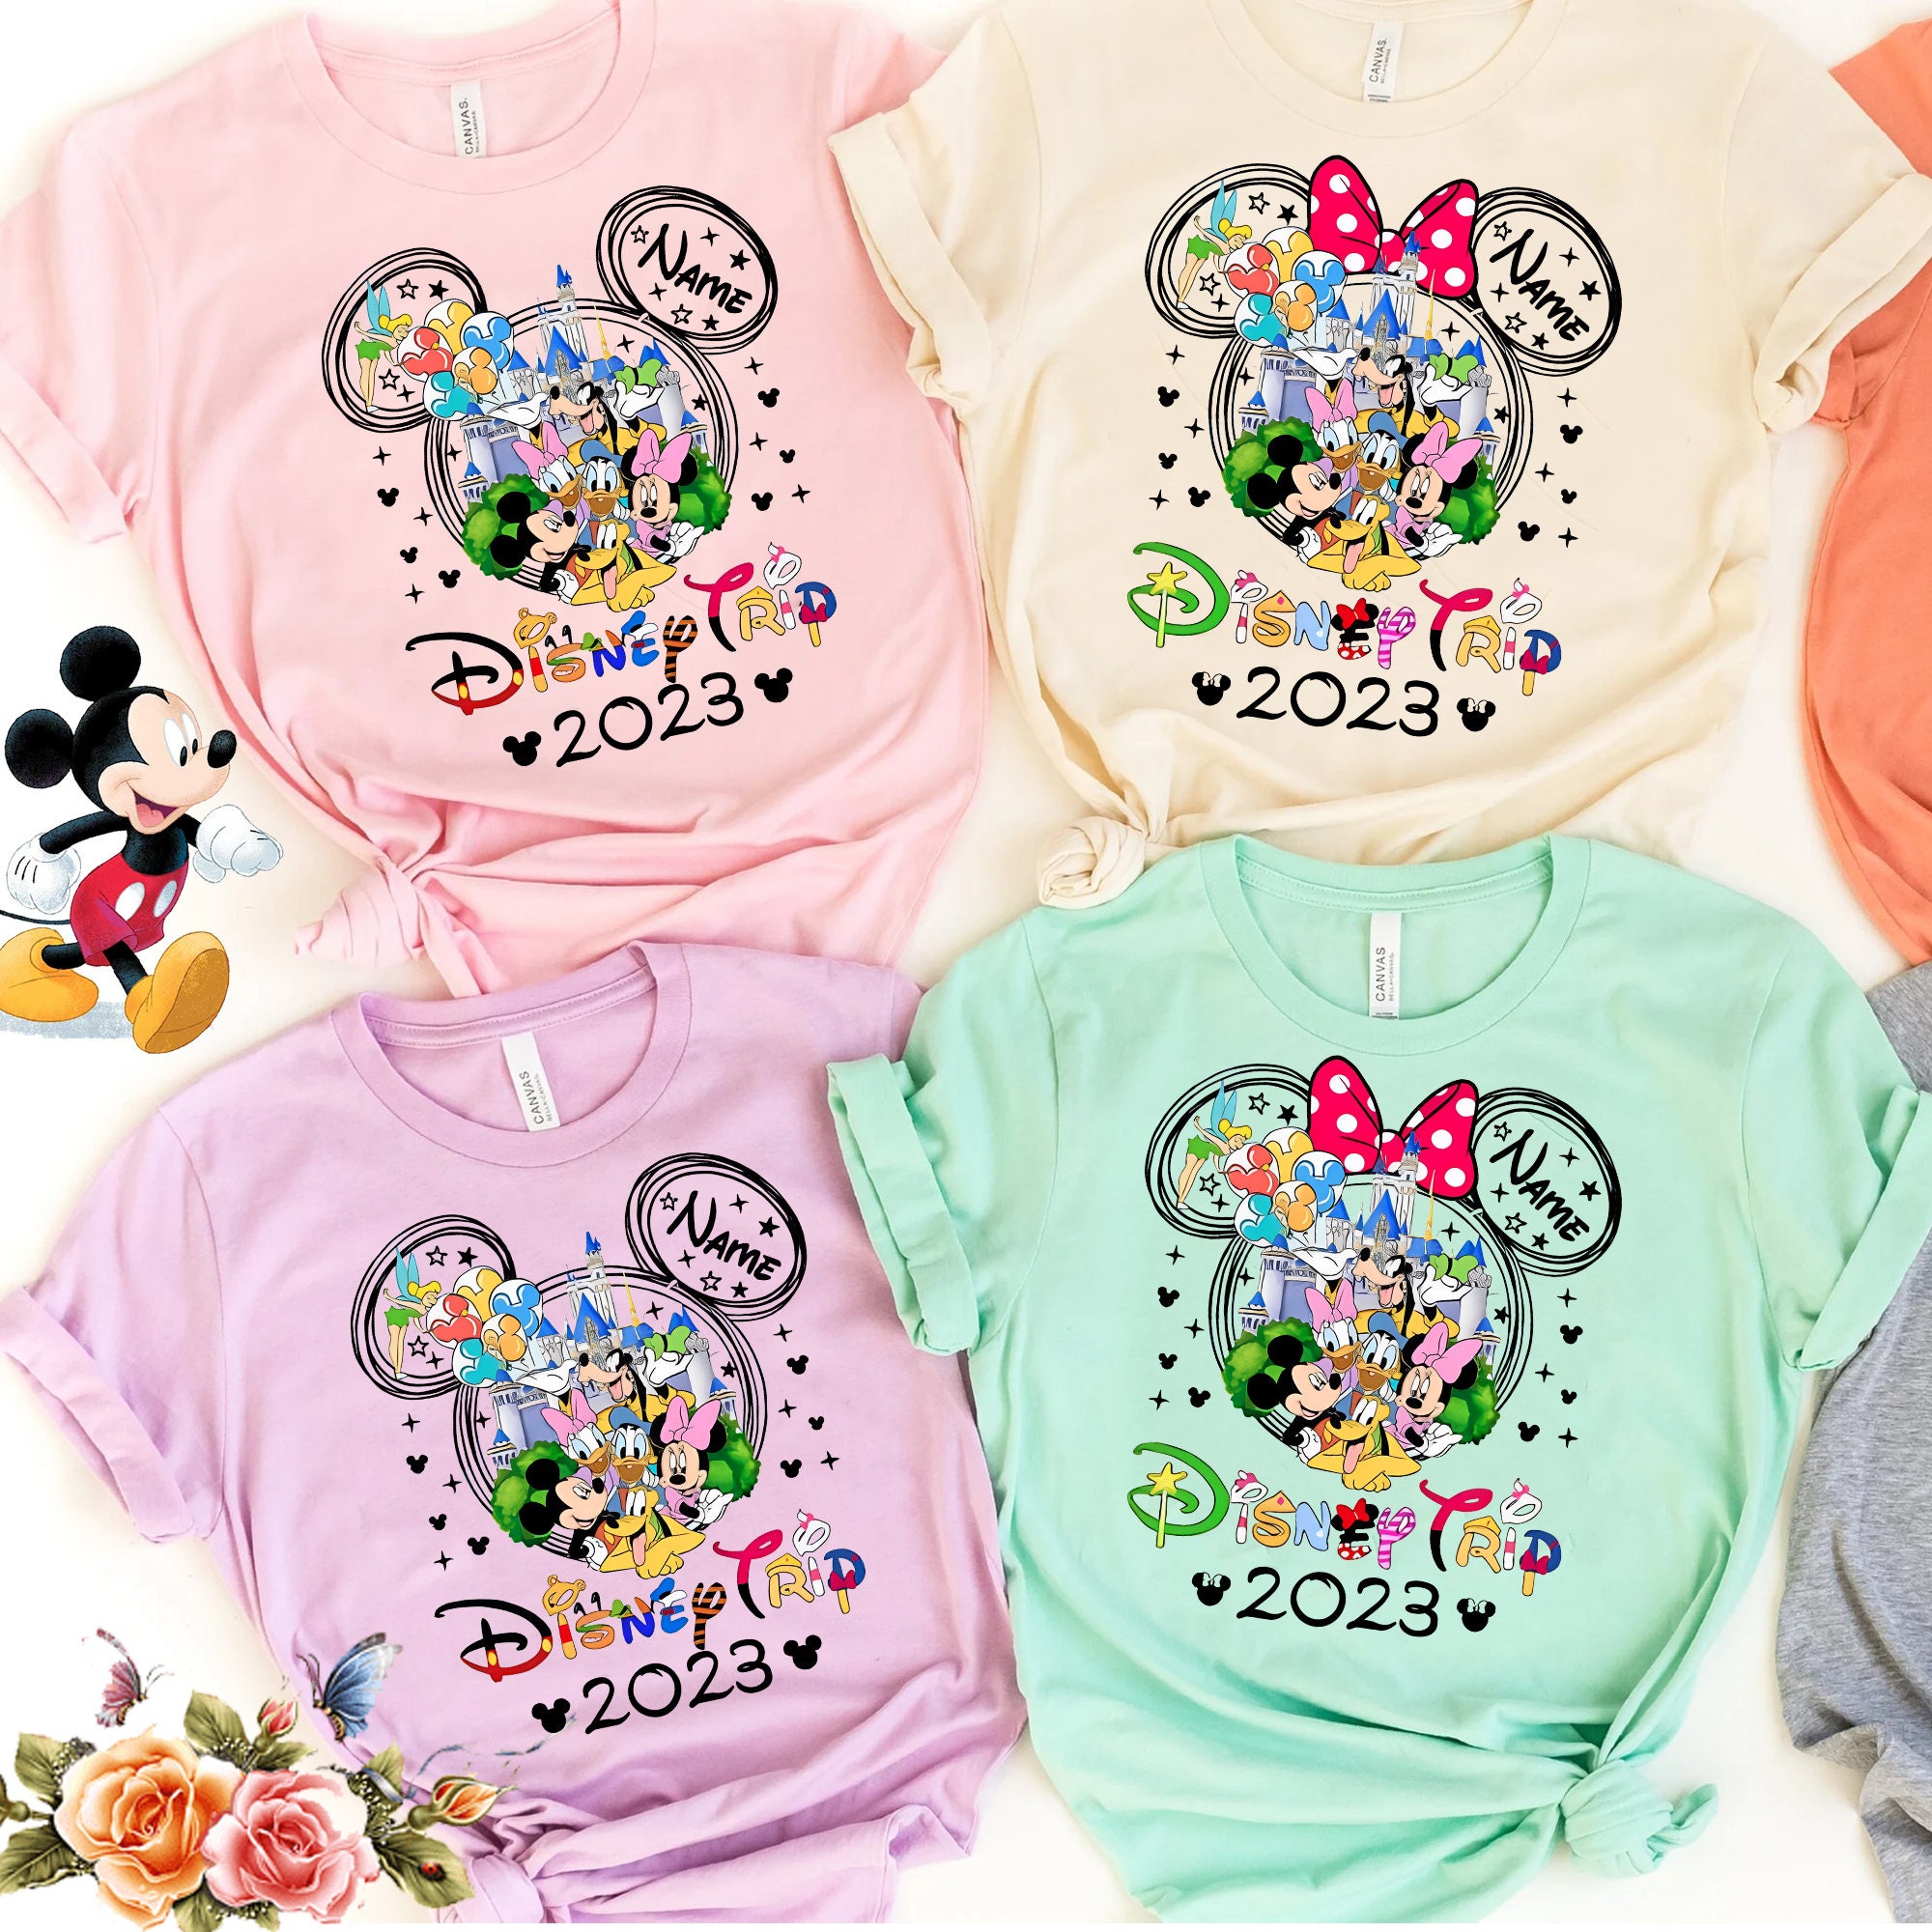 Discover Disney trip 2023 shirt, Disney Family vacation 2023 shirts, Mickey Minnie Disneyworld Disneyland